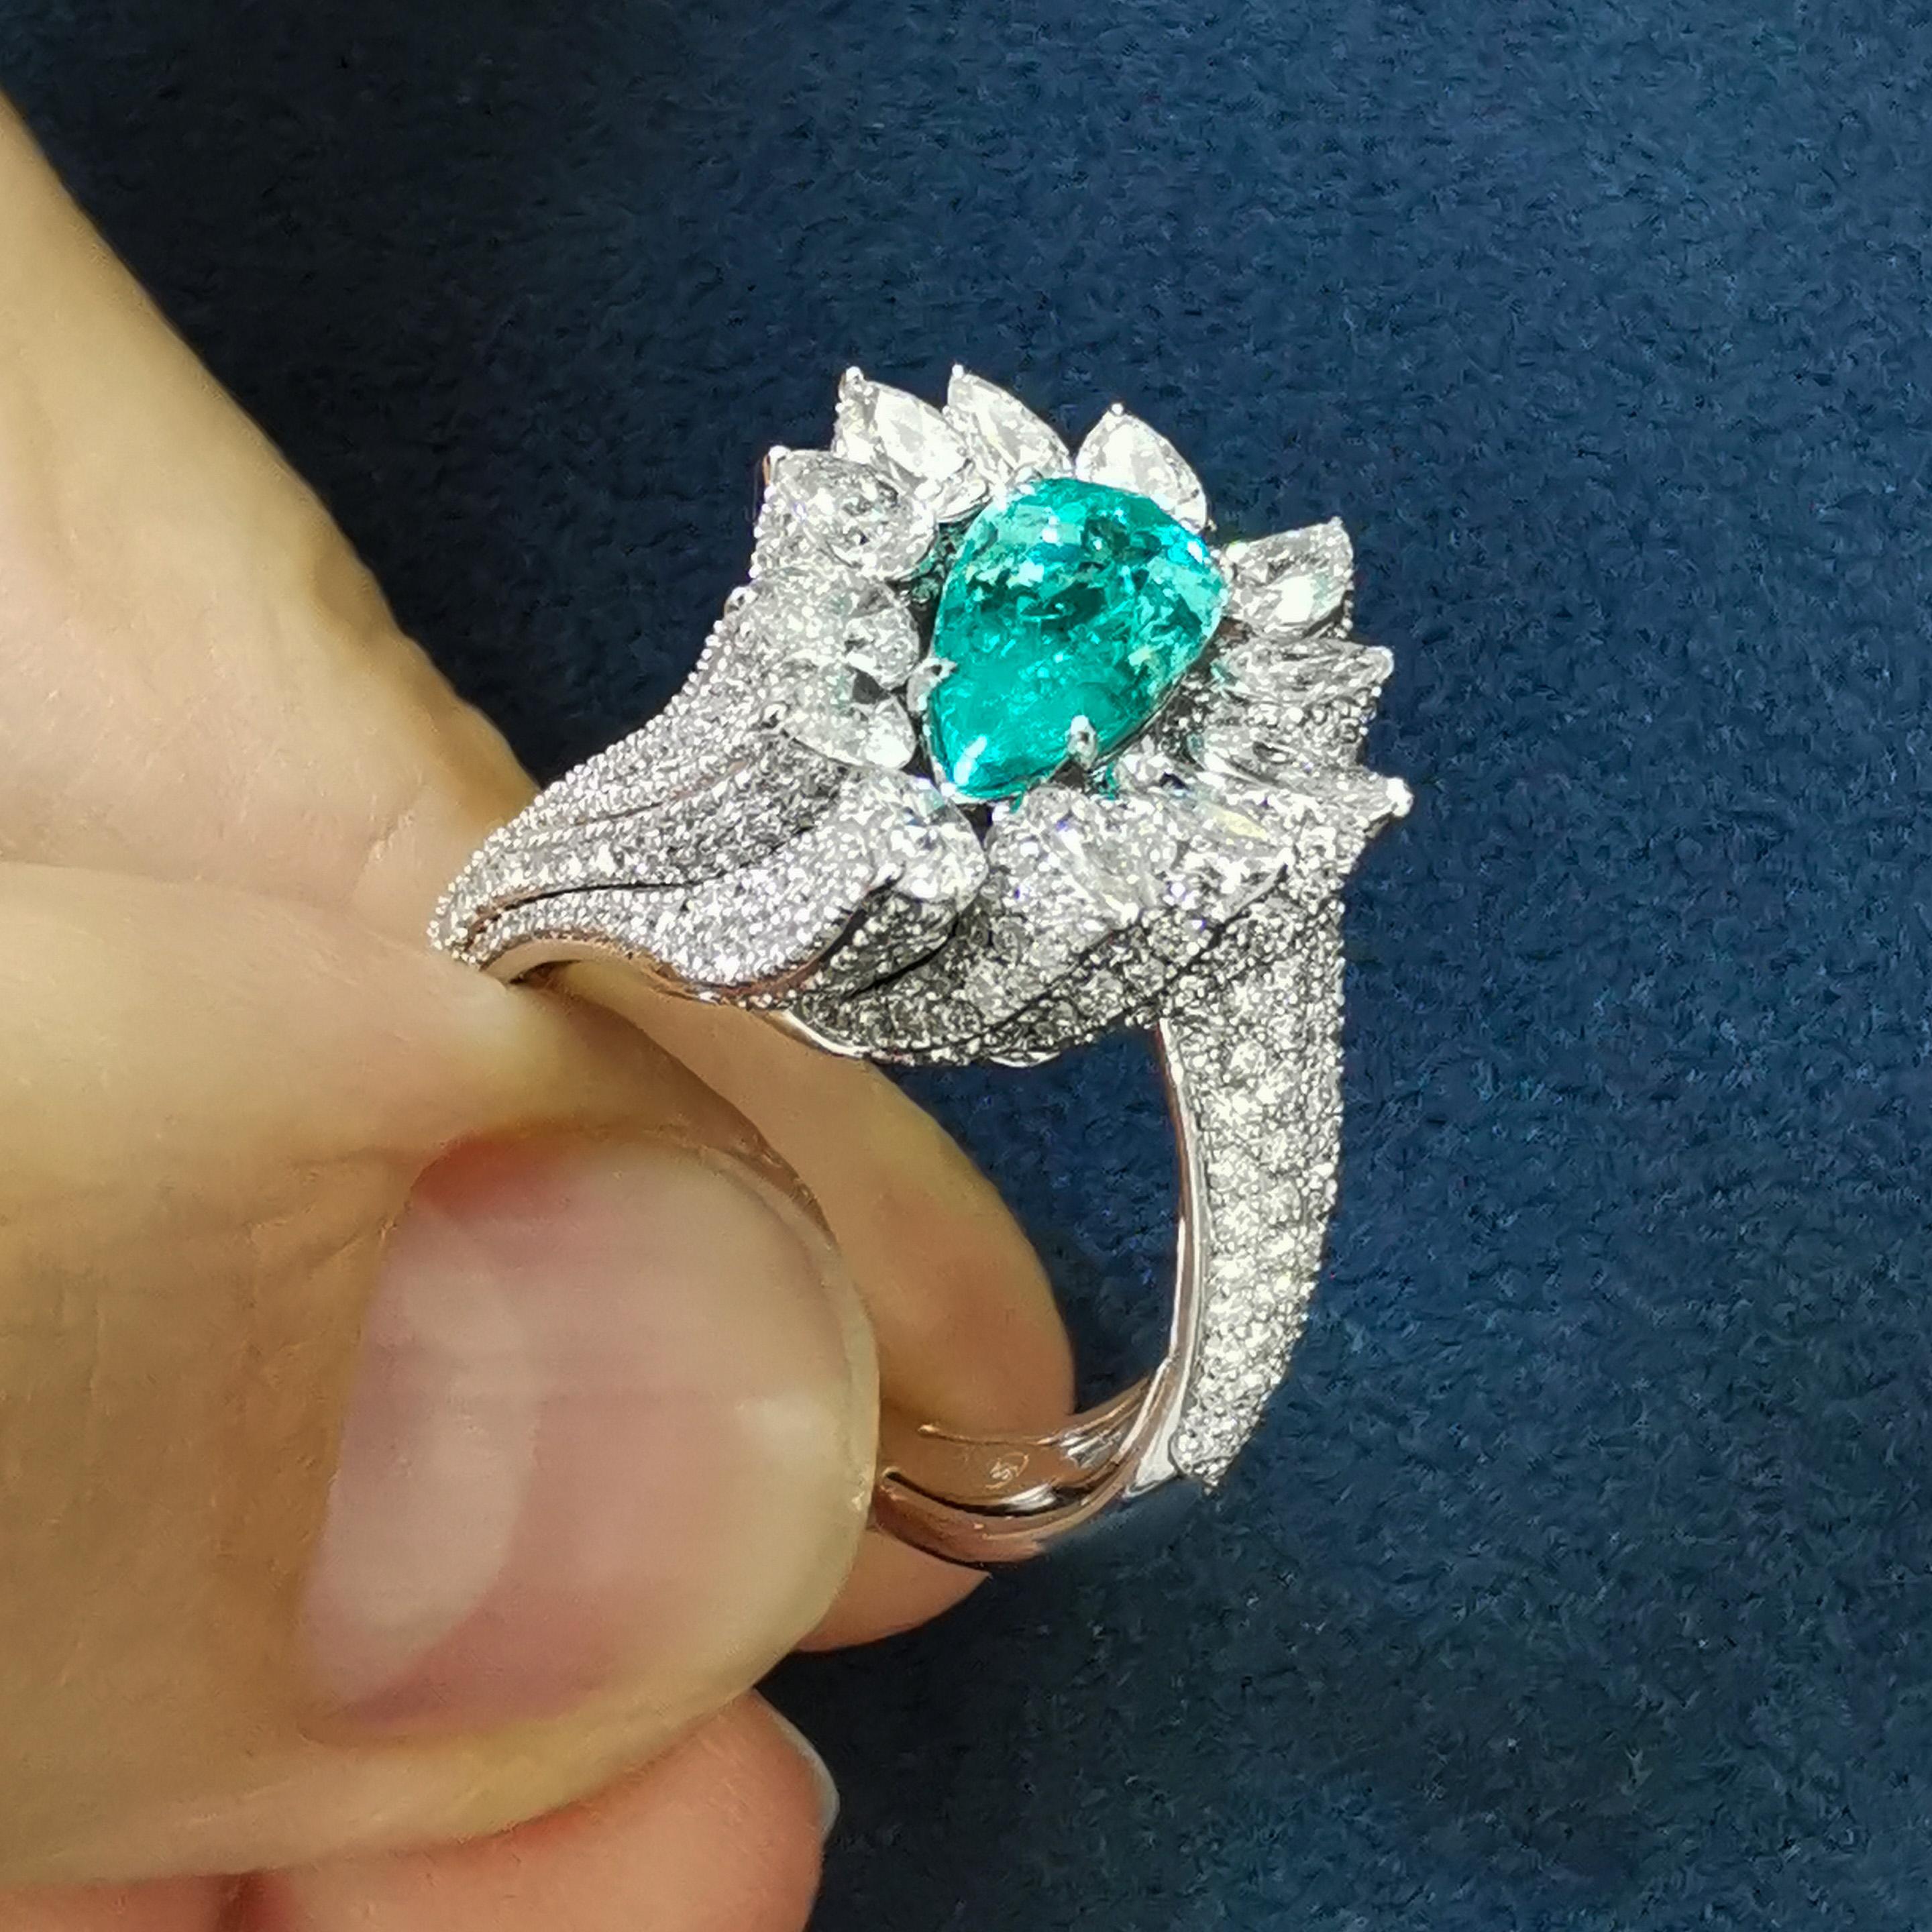 1.76 carat diamond ring